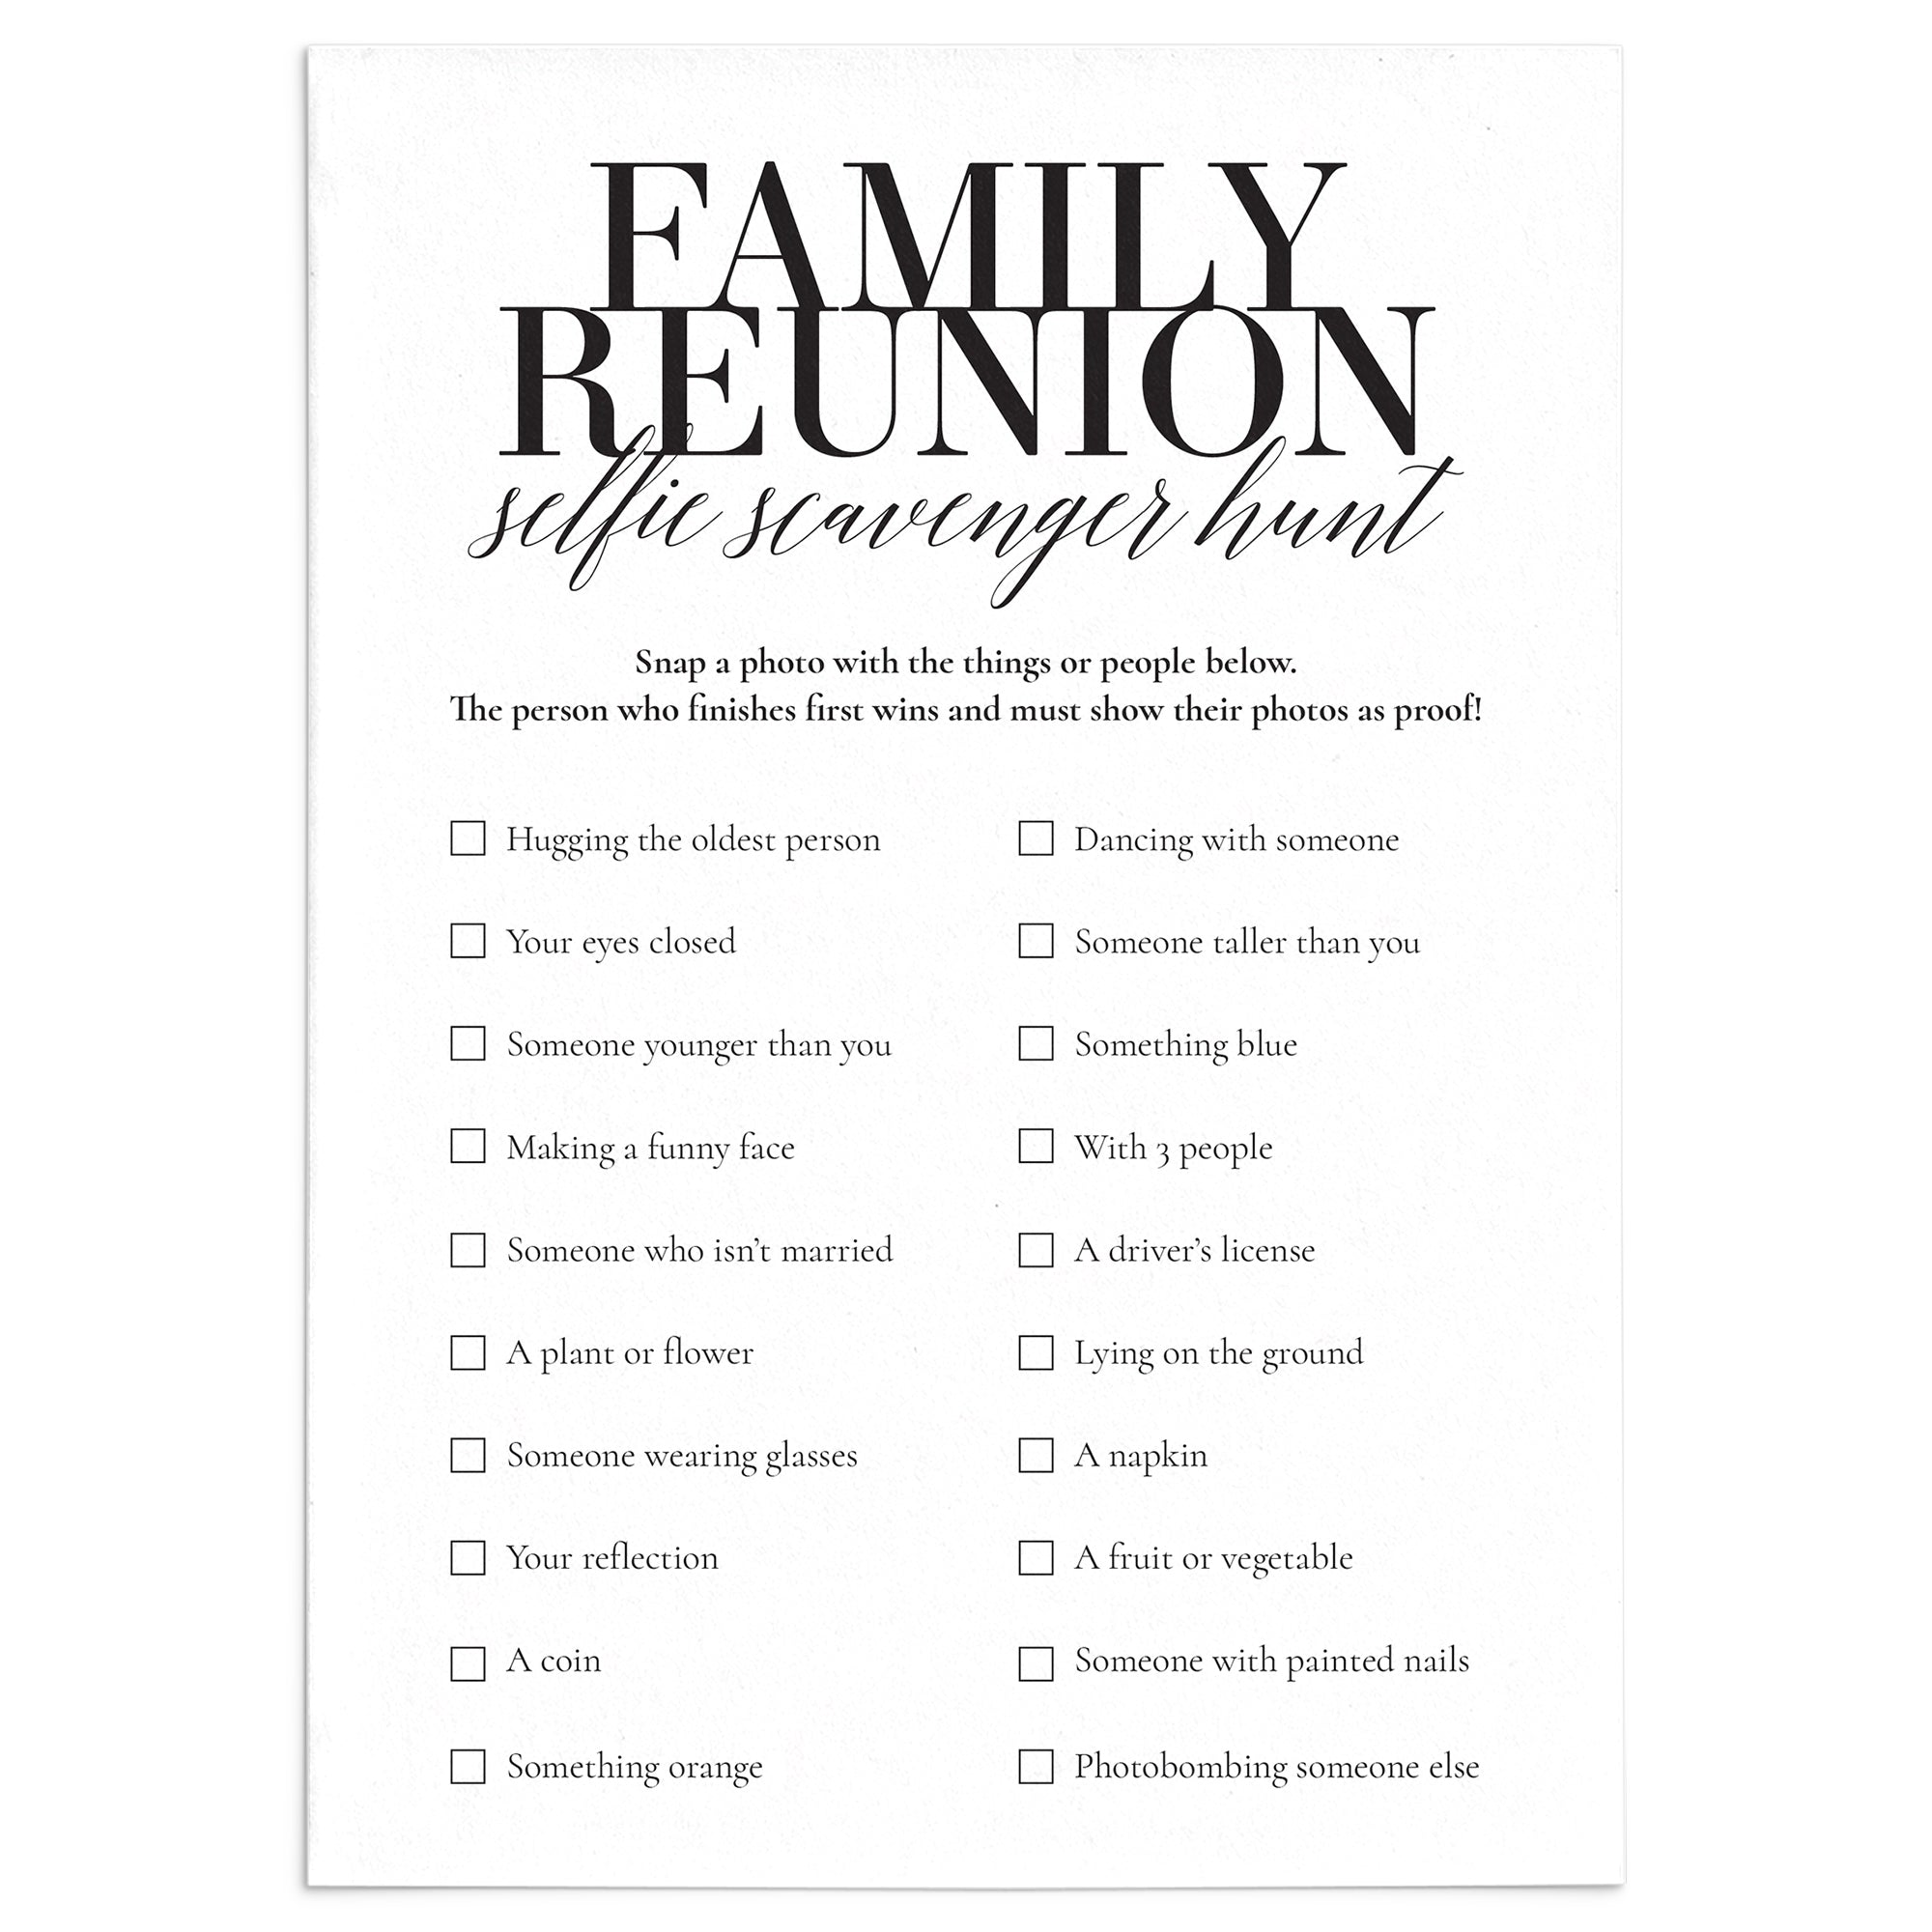 family reunion program templates